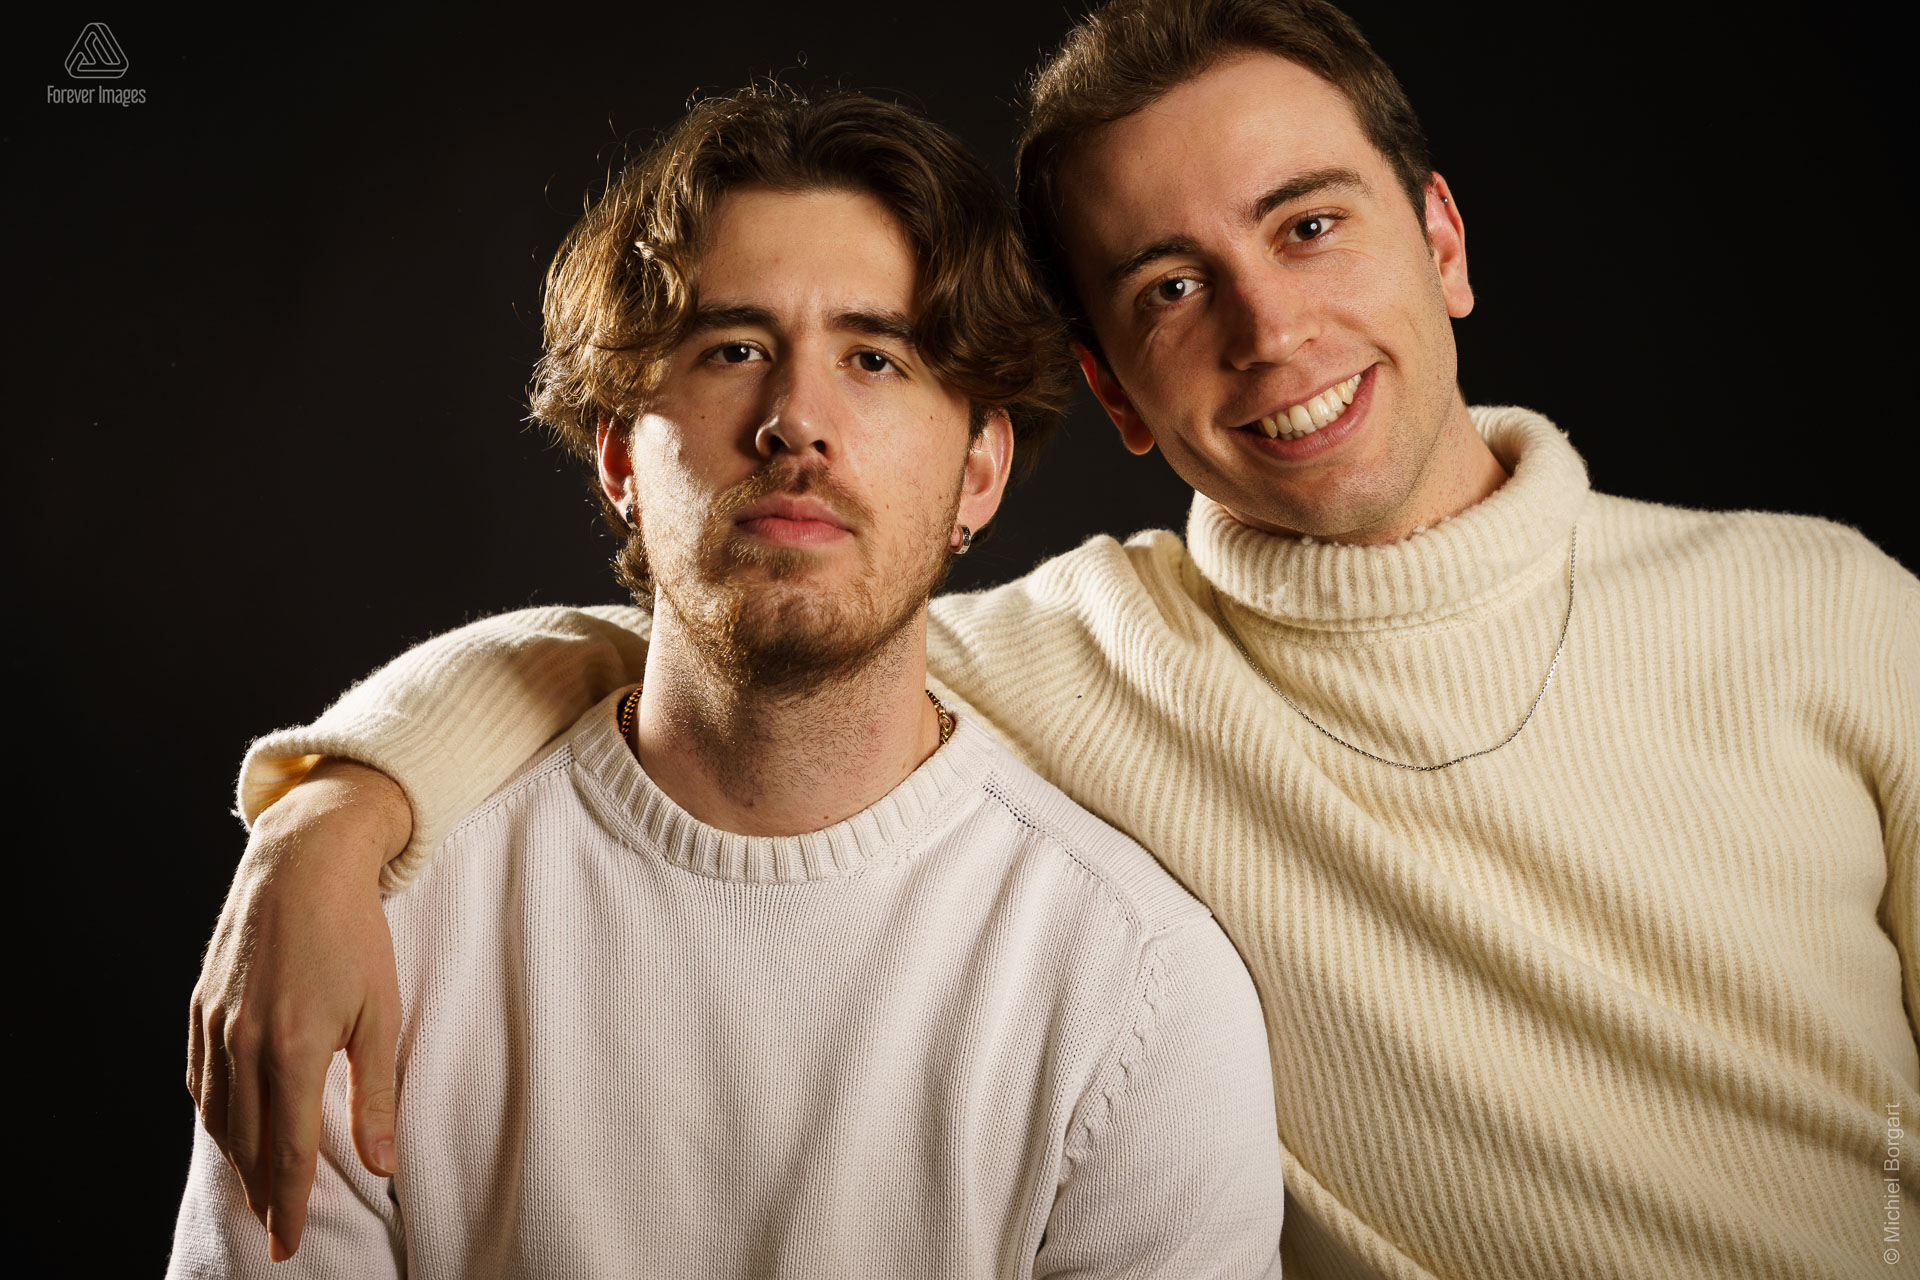 Portretfoto twee broers jonge mannen in witte trui | Santiago | Portretfotograaf Michiel Borgart - Forever Images.